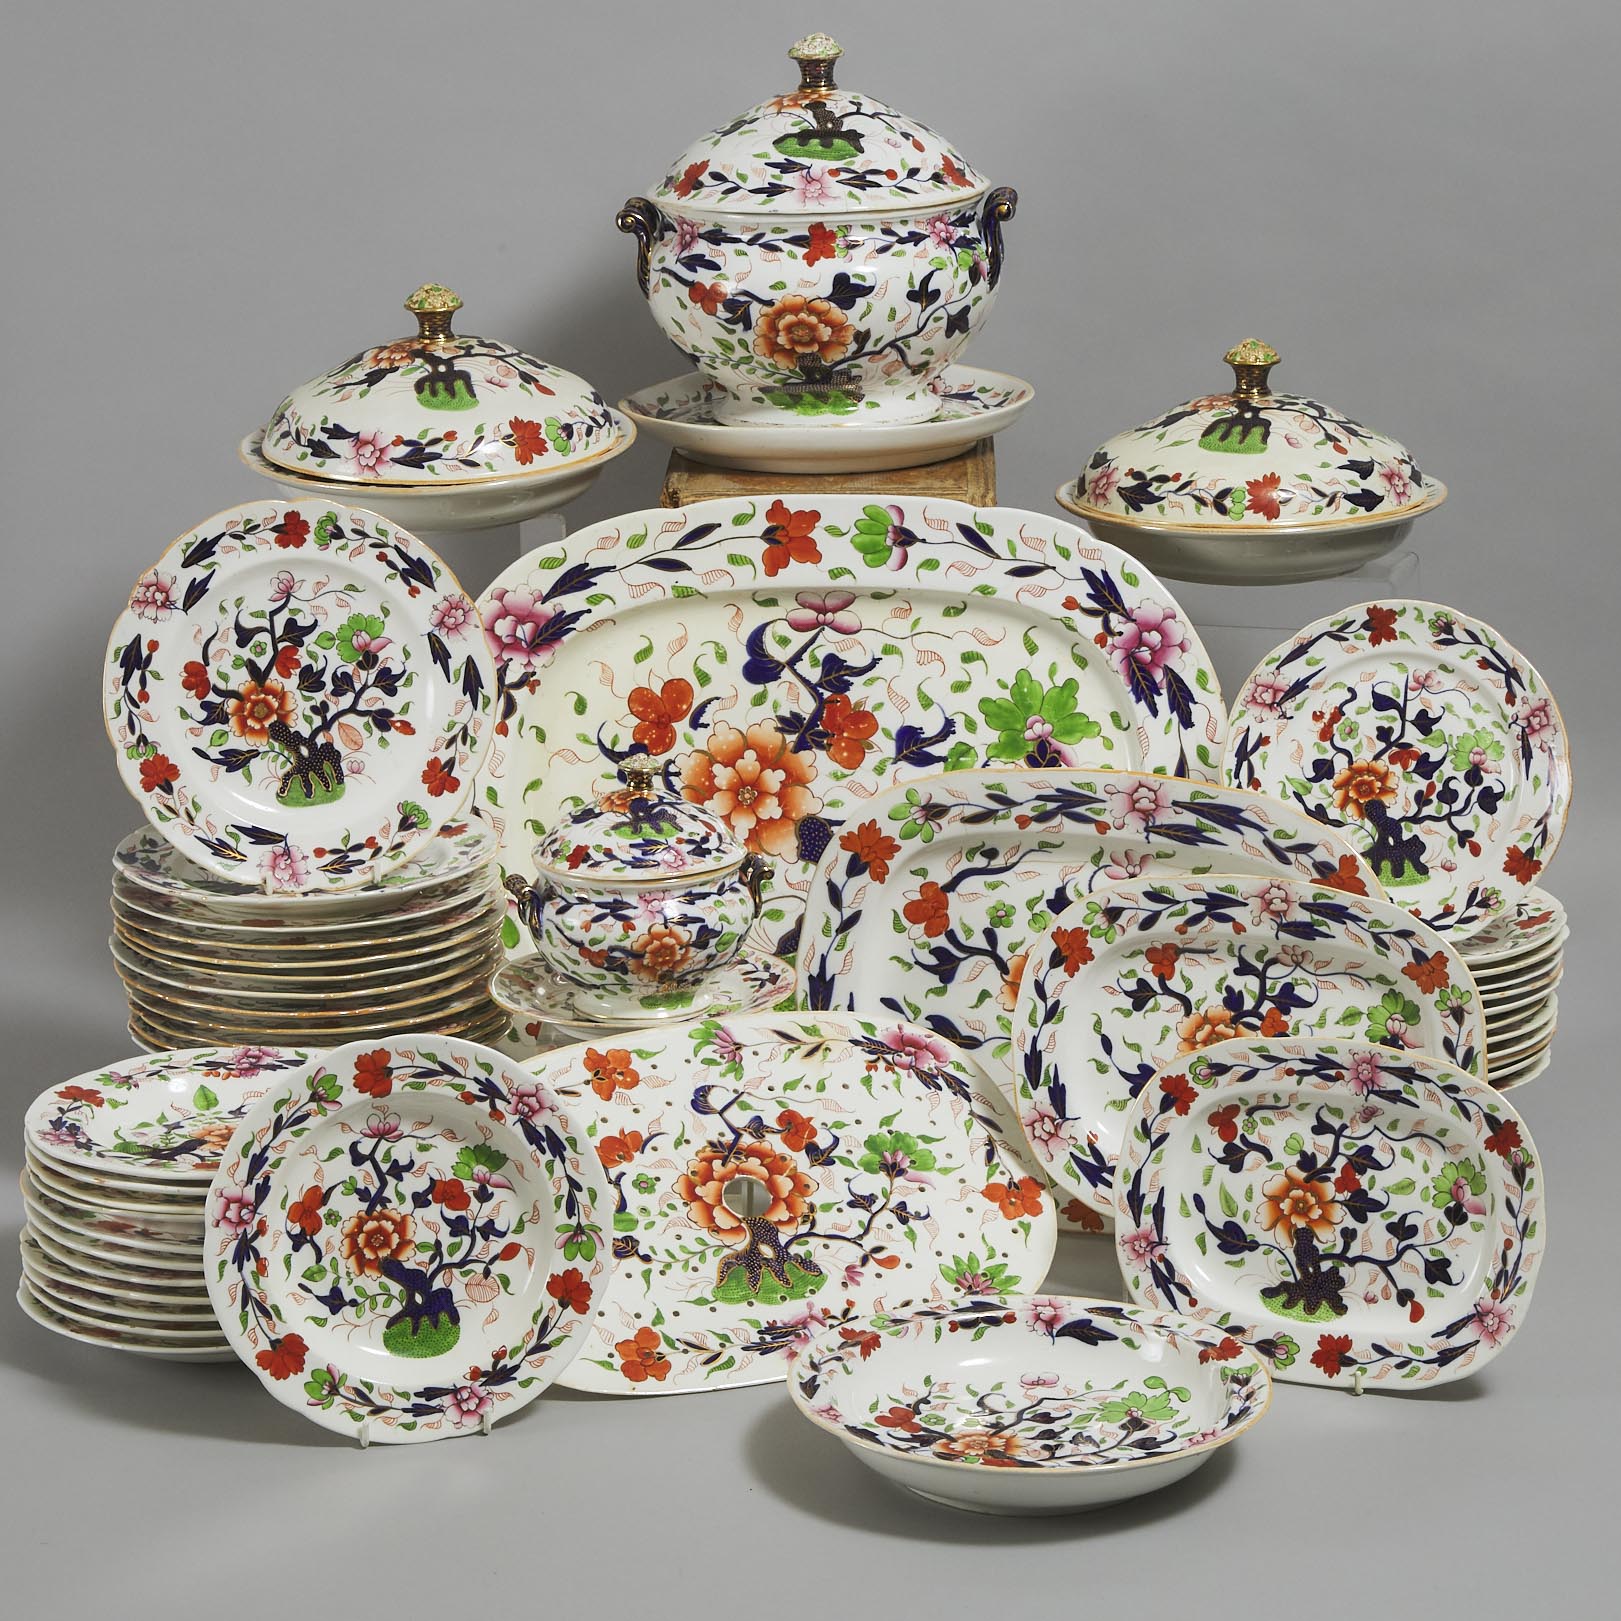 English Porcelain Japan Pattern Dinner Service, c.1820